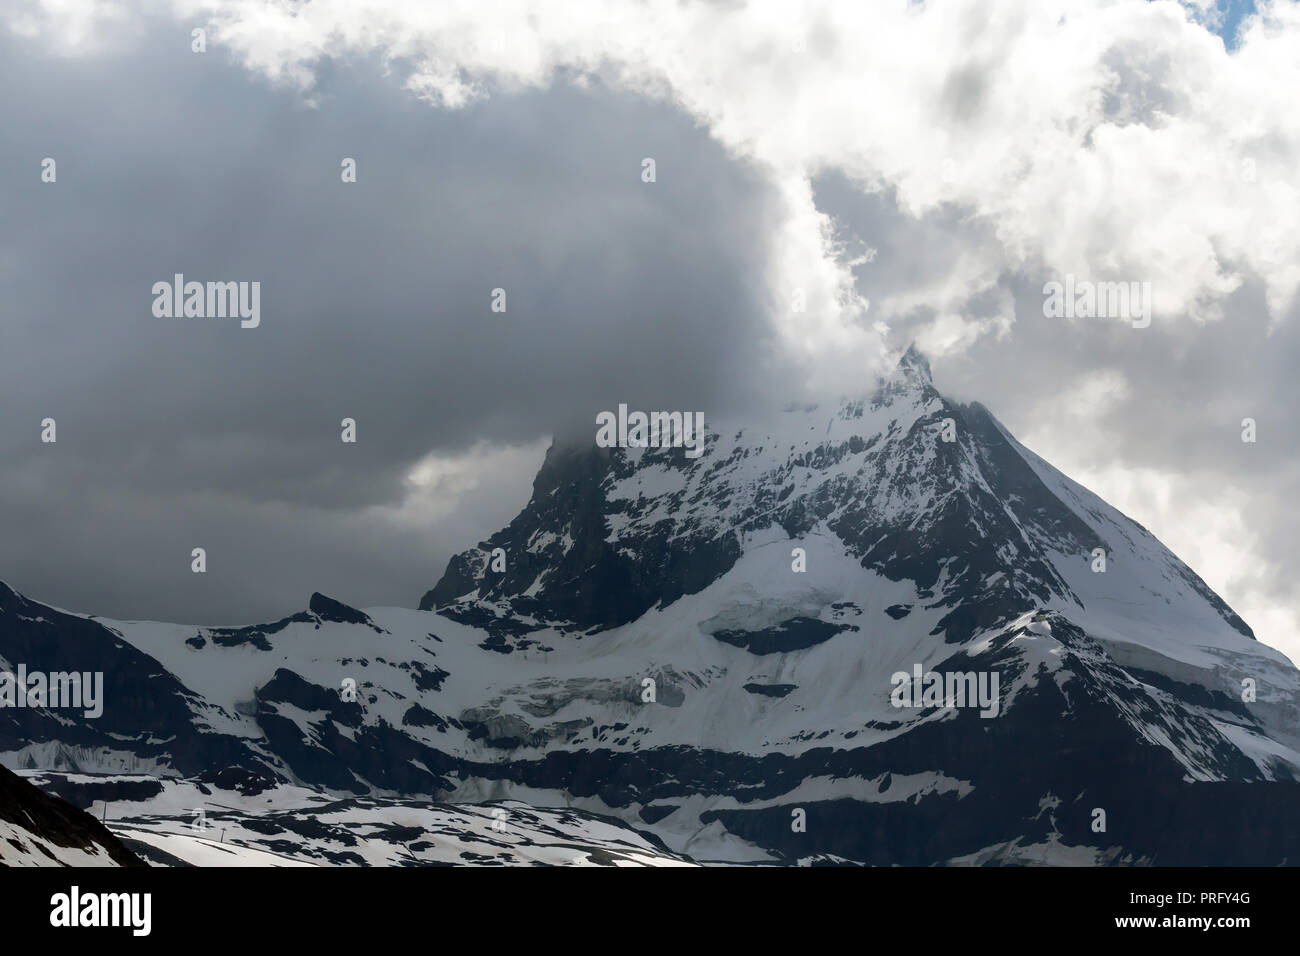 View of  Matterhorn peak above clouds, Pennine Alps, Switzerland. Stock Photo